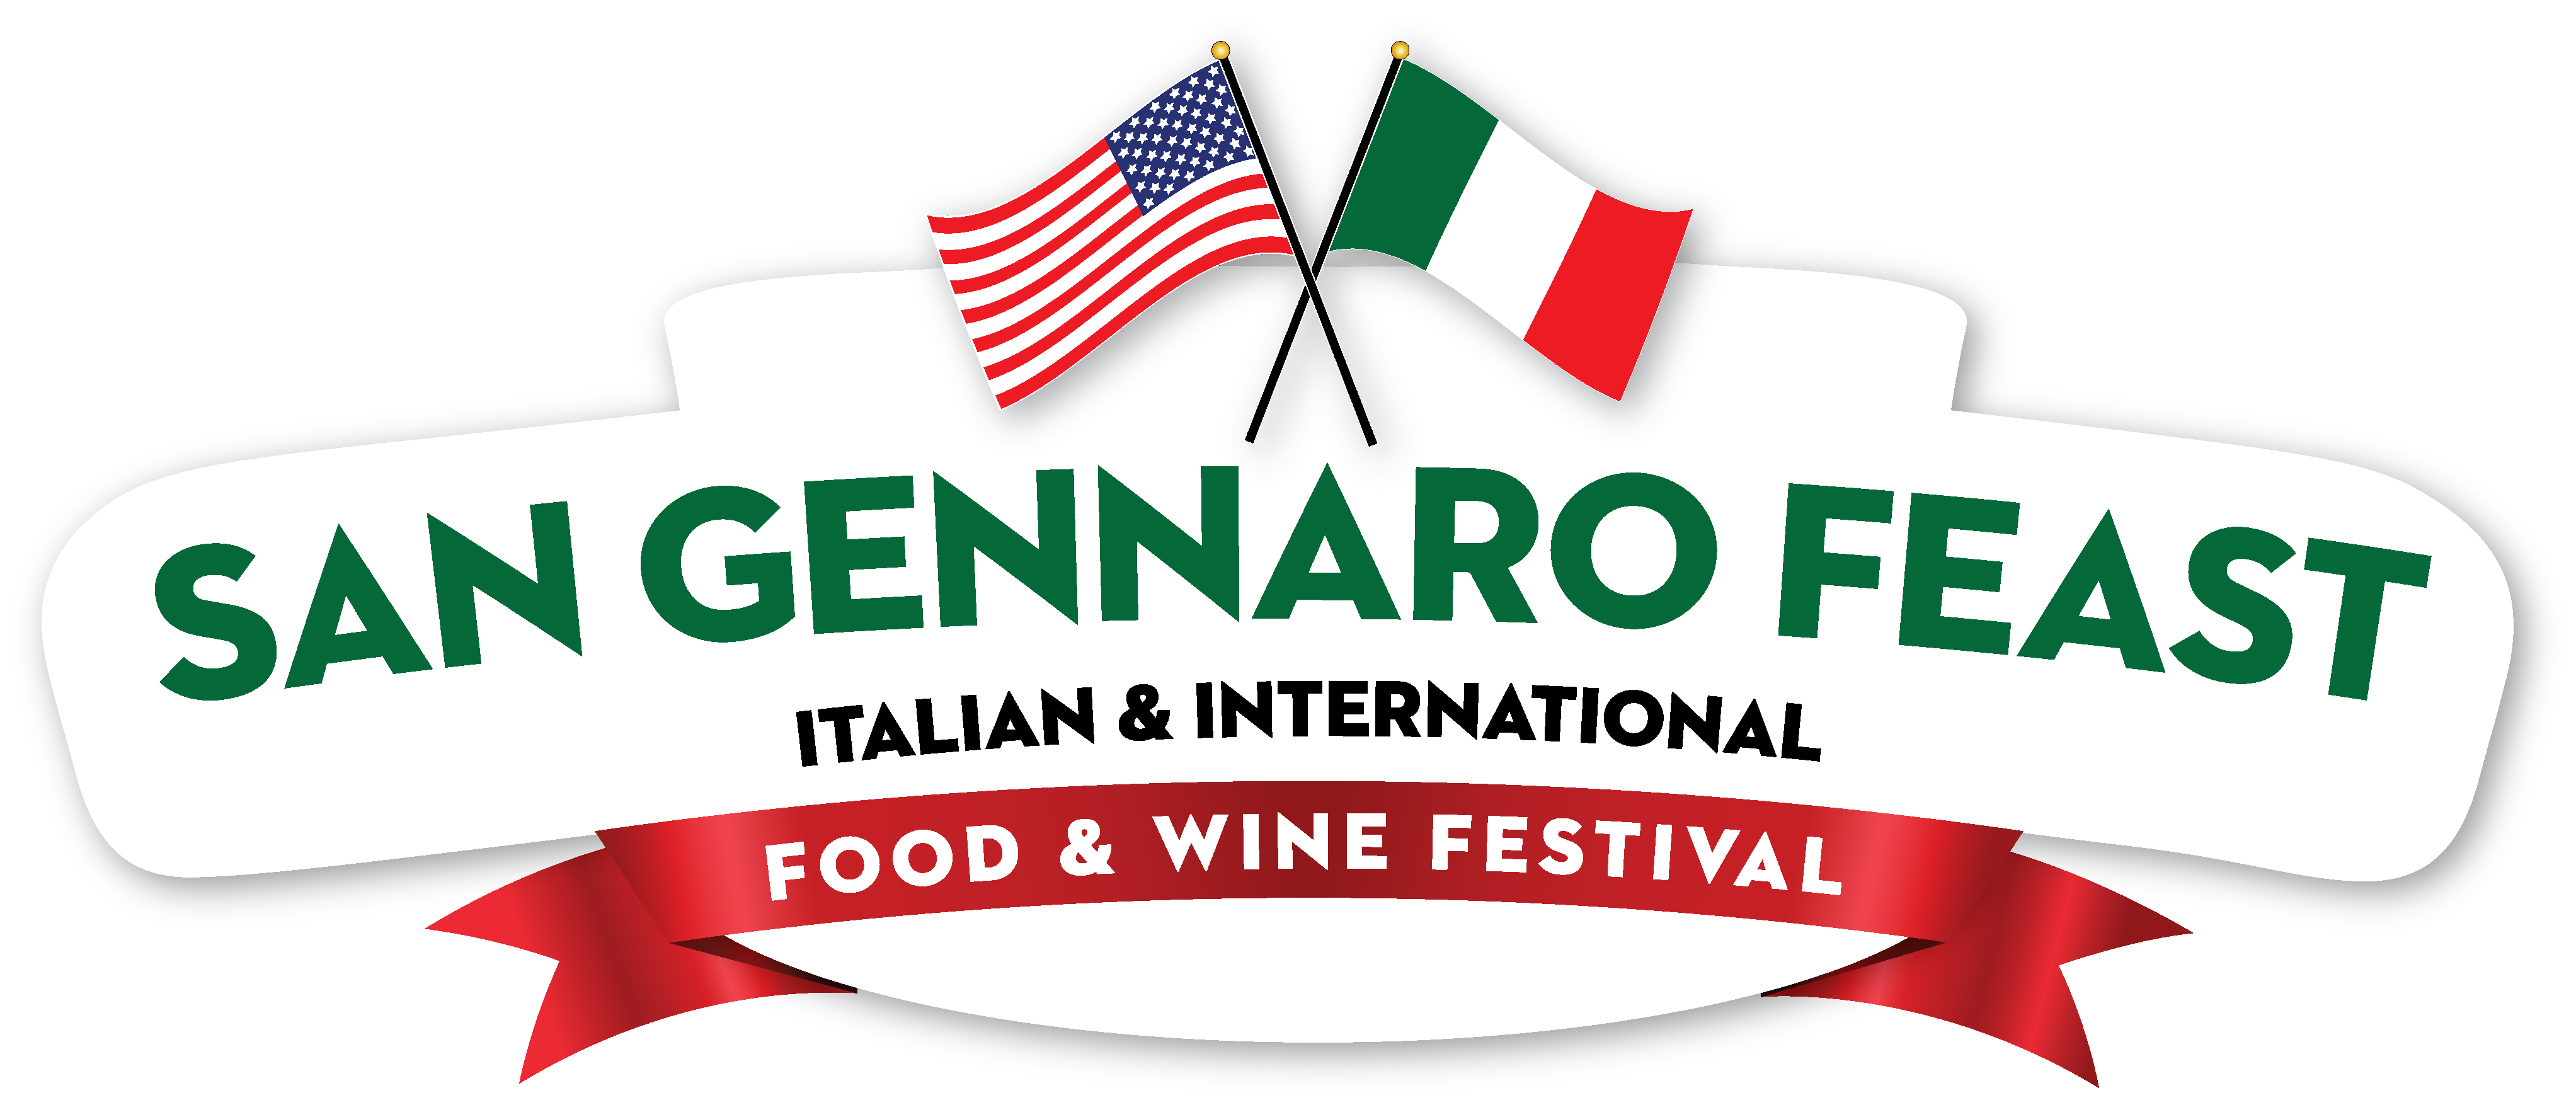 Classic San Gennaro Feast - Food & Wine Logo